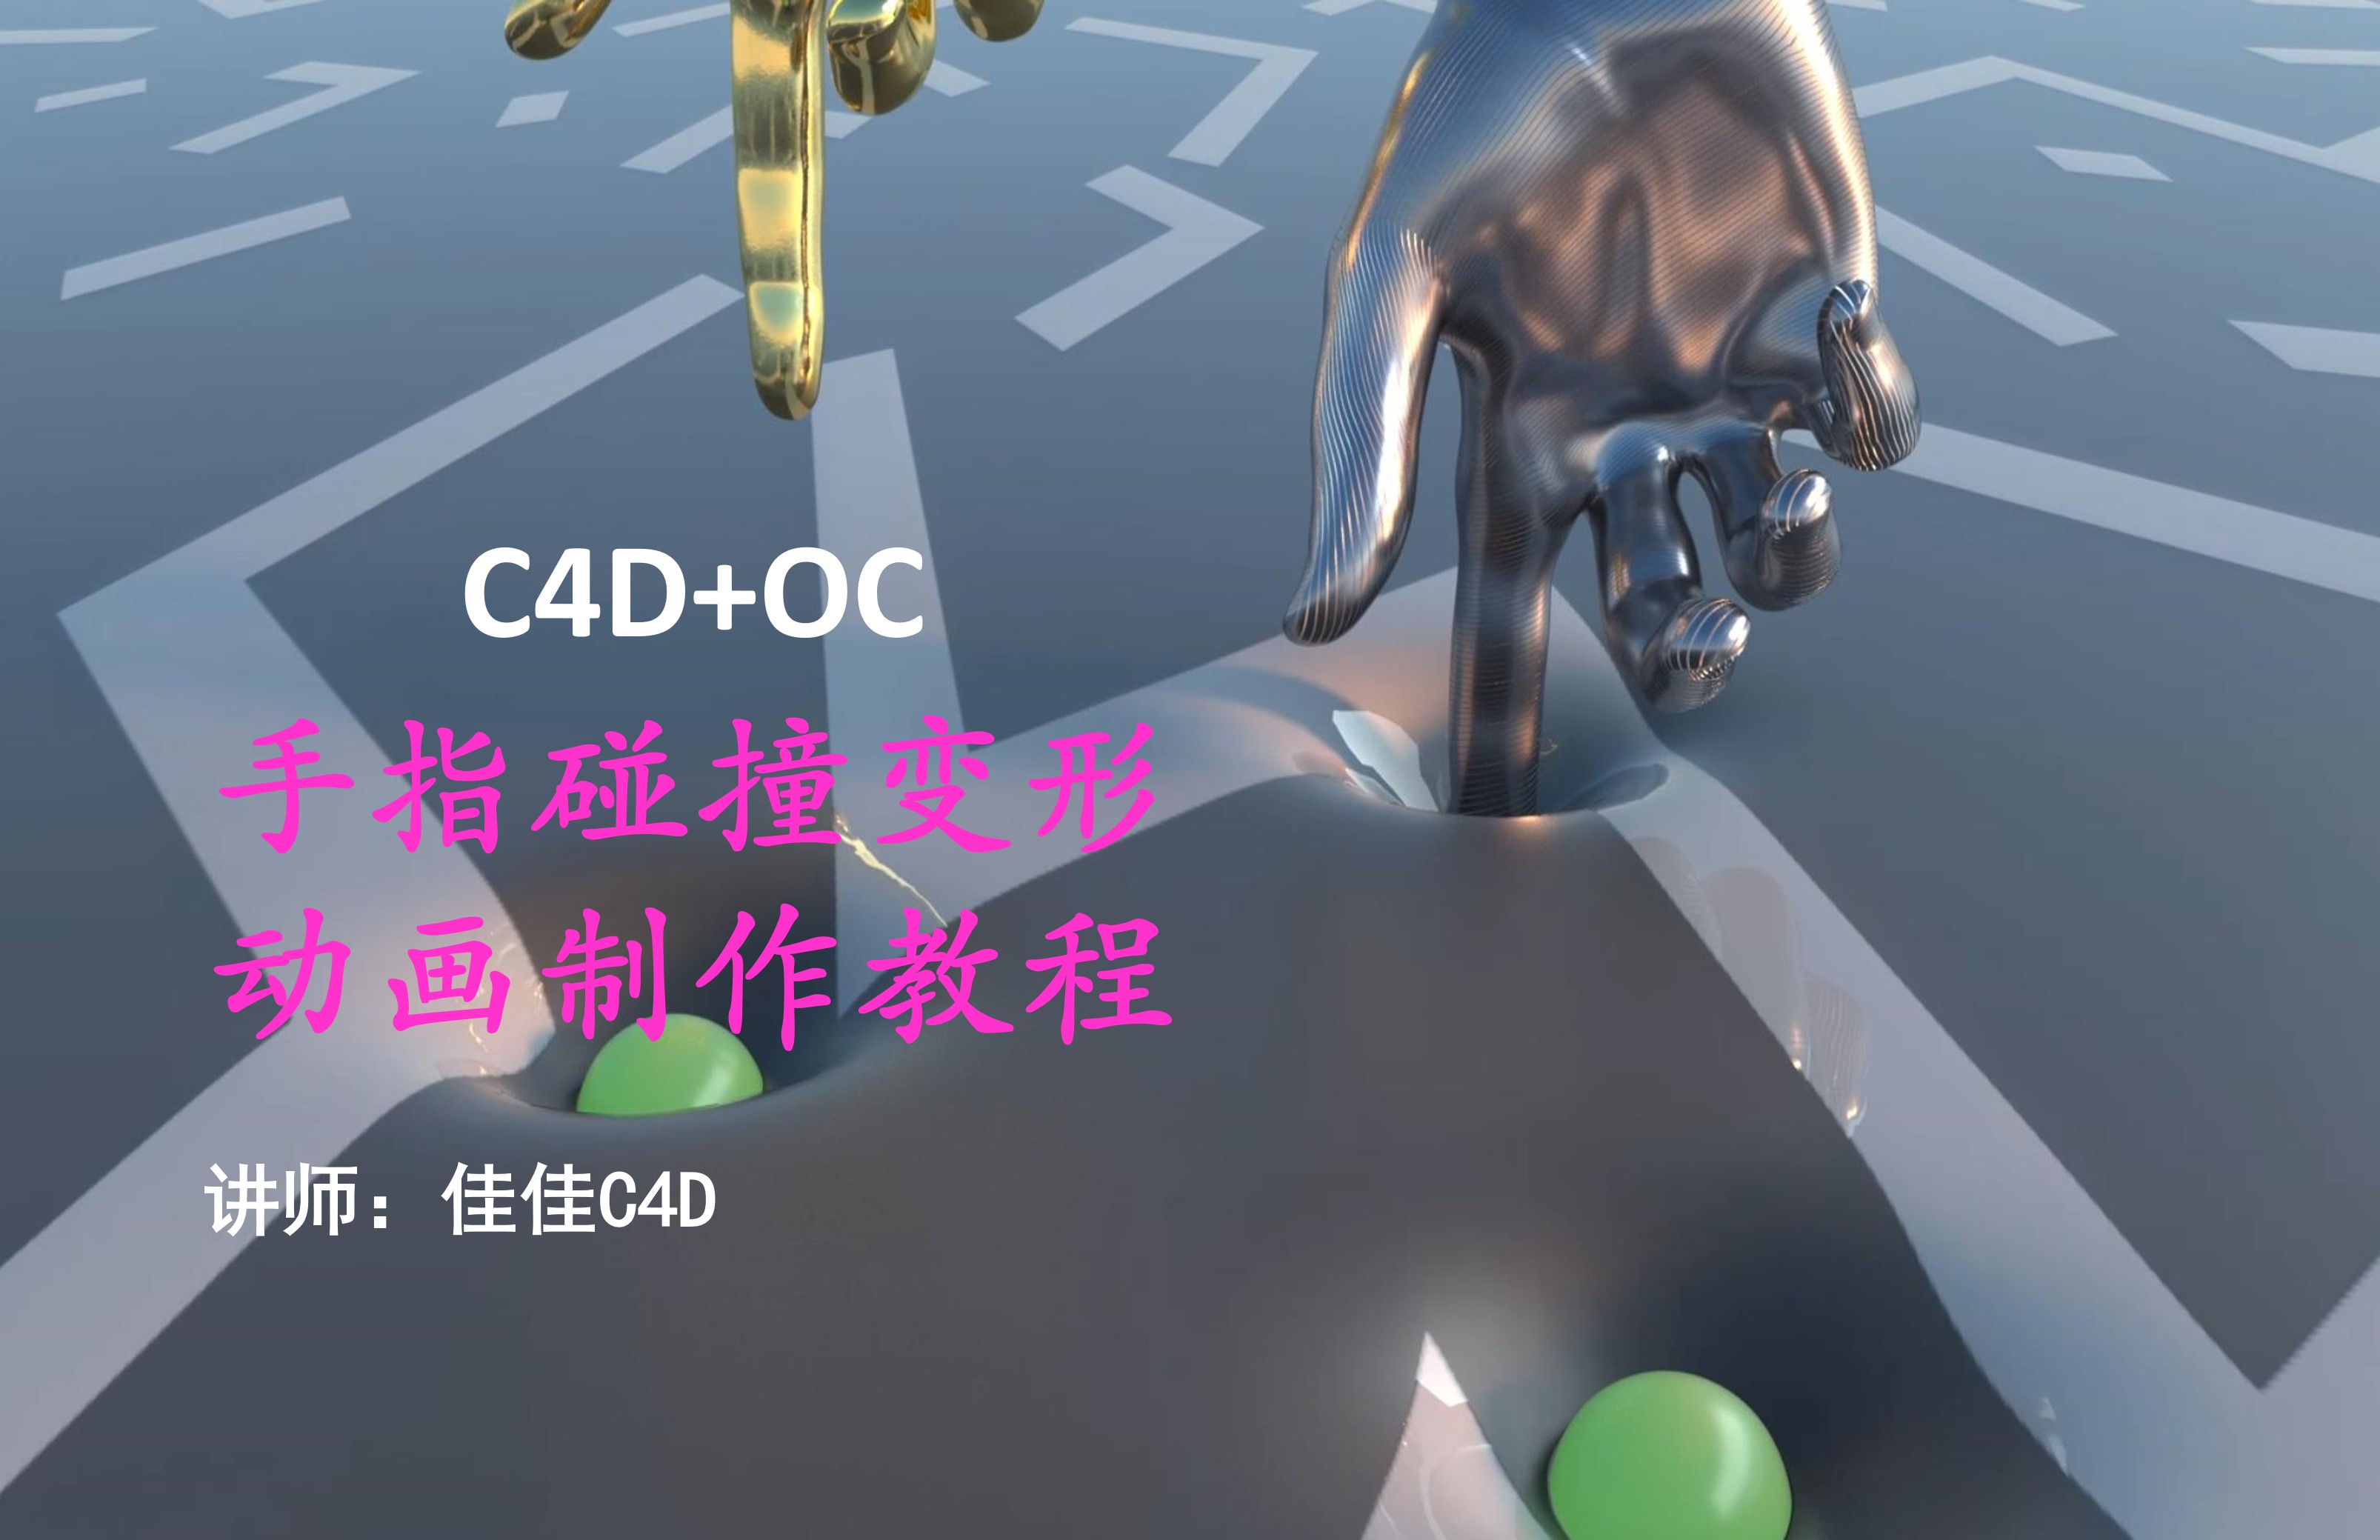 C4D+OC手指碰撞变形动画制作教程